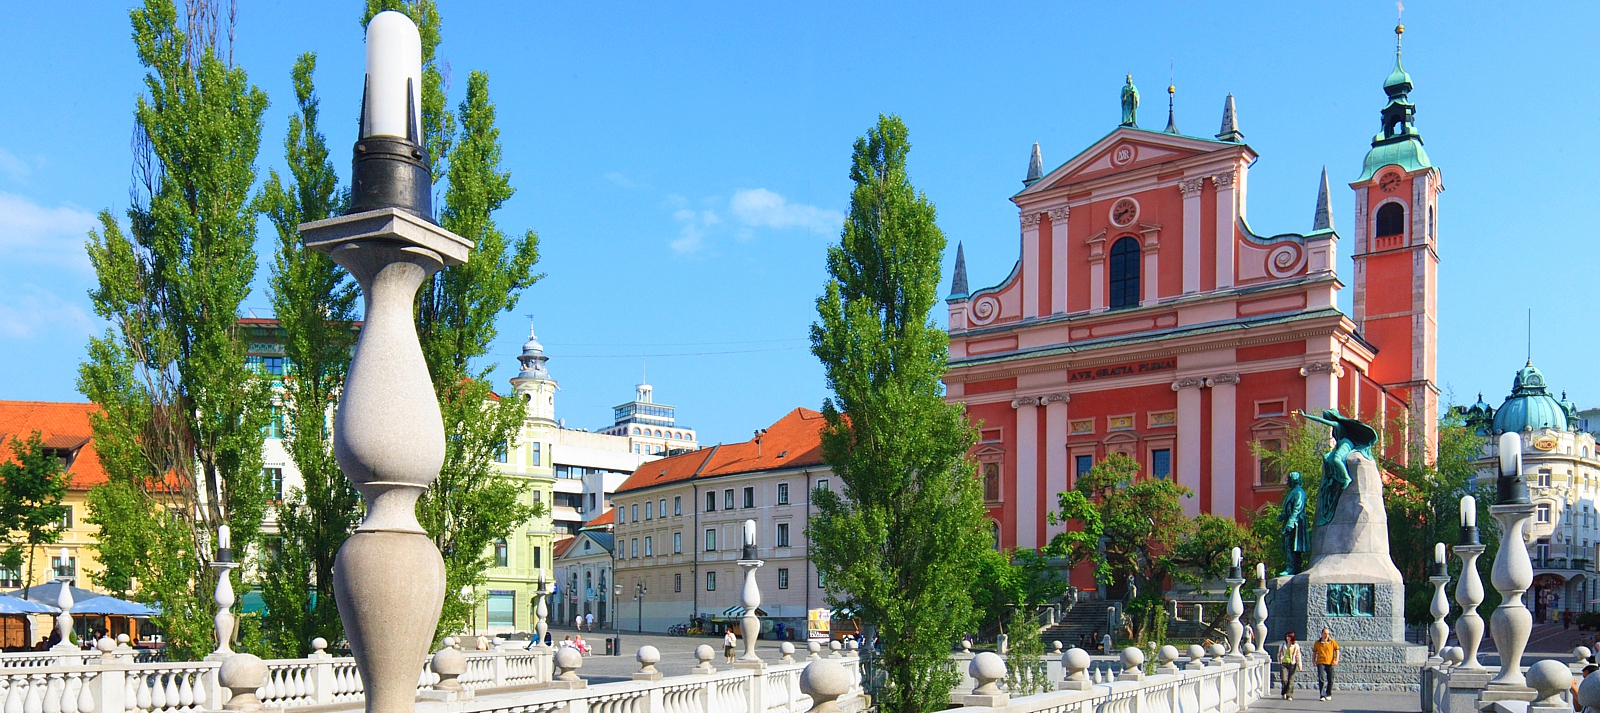 Ljubljana: Franciscan church and Triple bridge